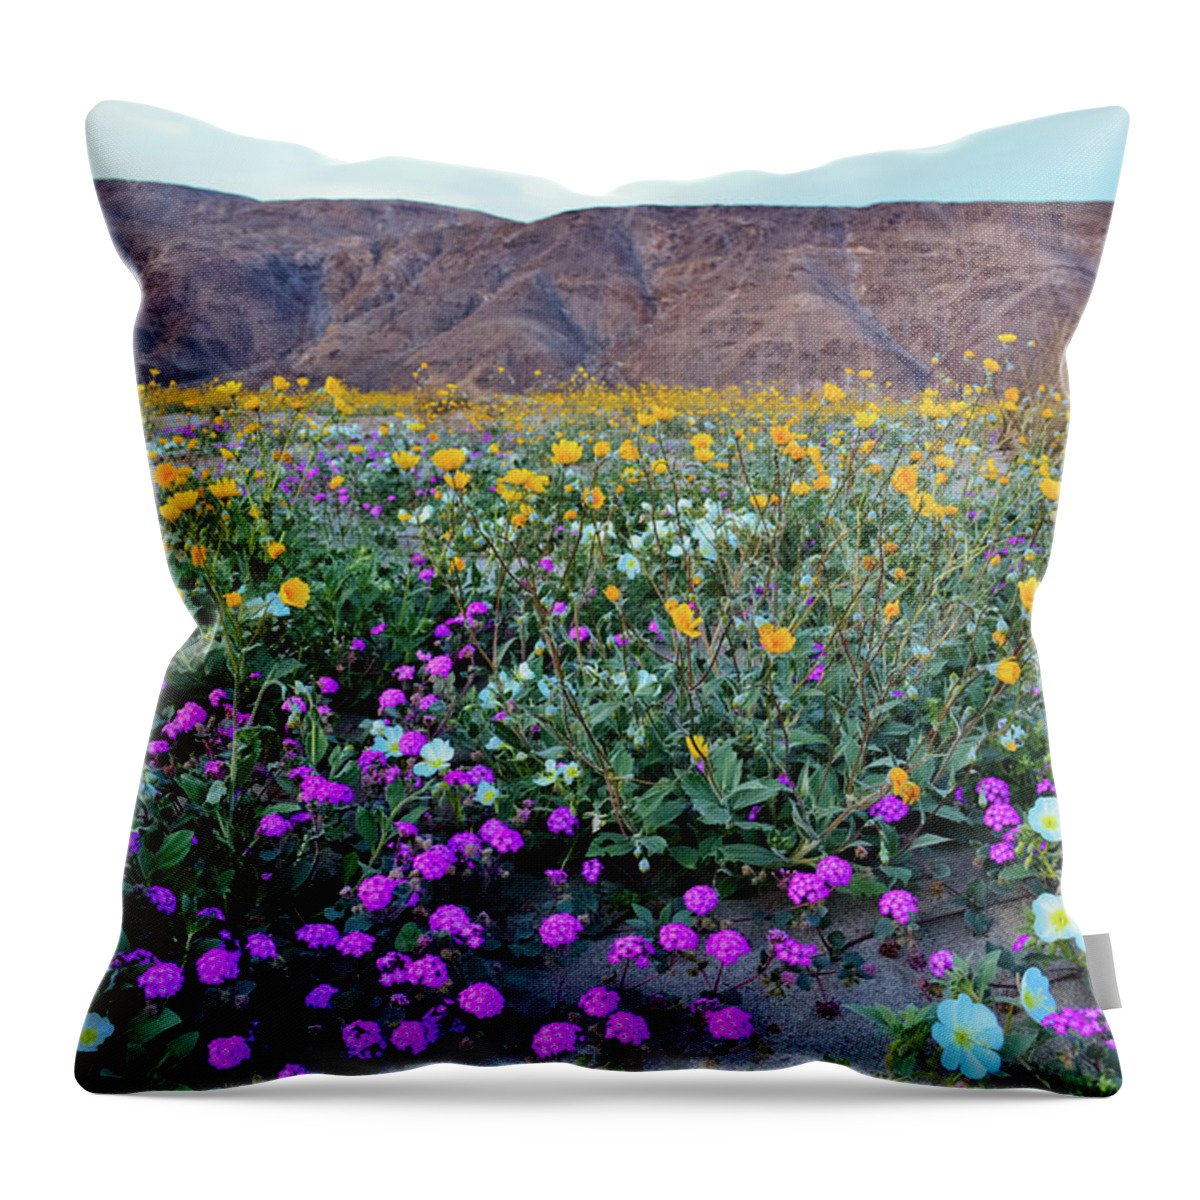 Anza Borrego Desert State Park Throw Pillow featuring the photograph Anza Borrego Desert Super Bloom by Kyle Hanson